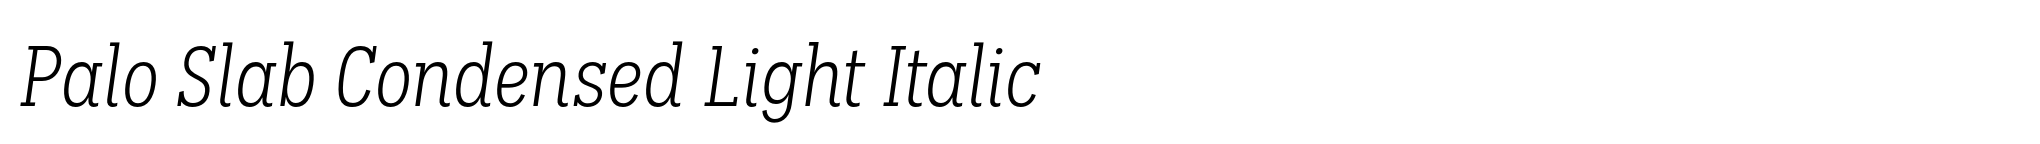 Palo Slab Condensed Light Italic image